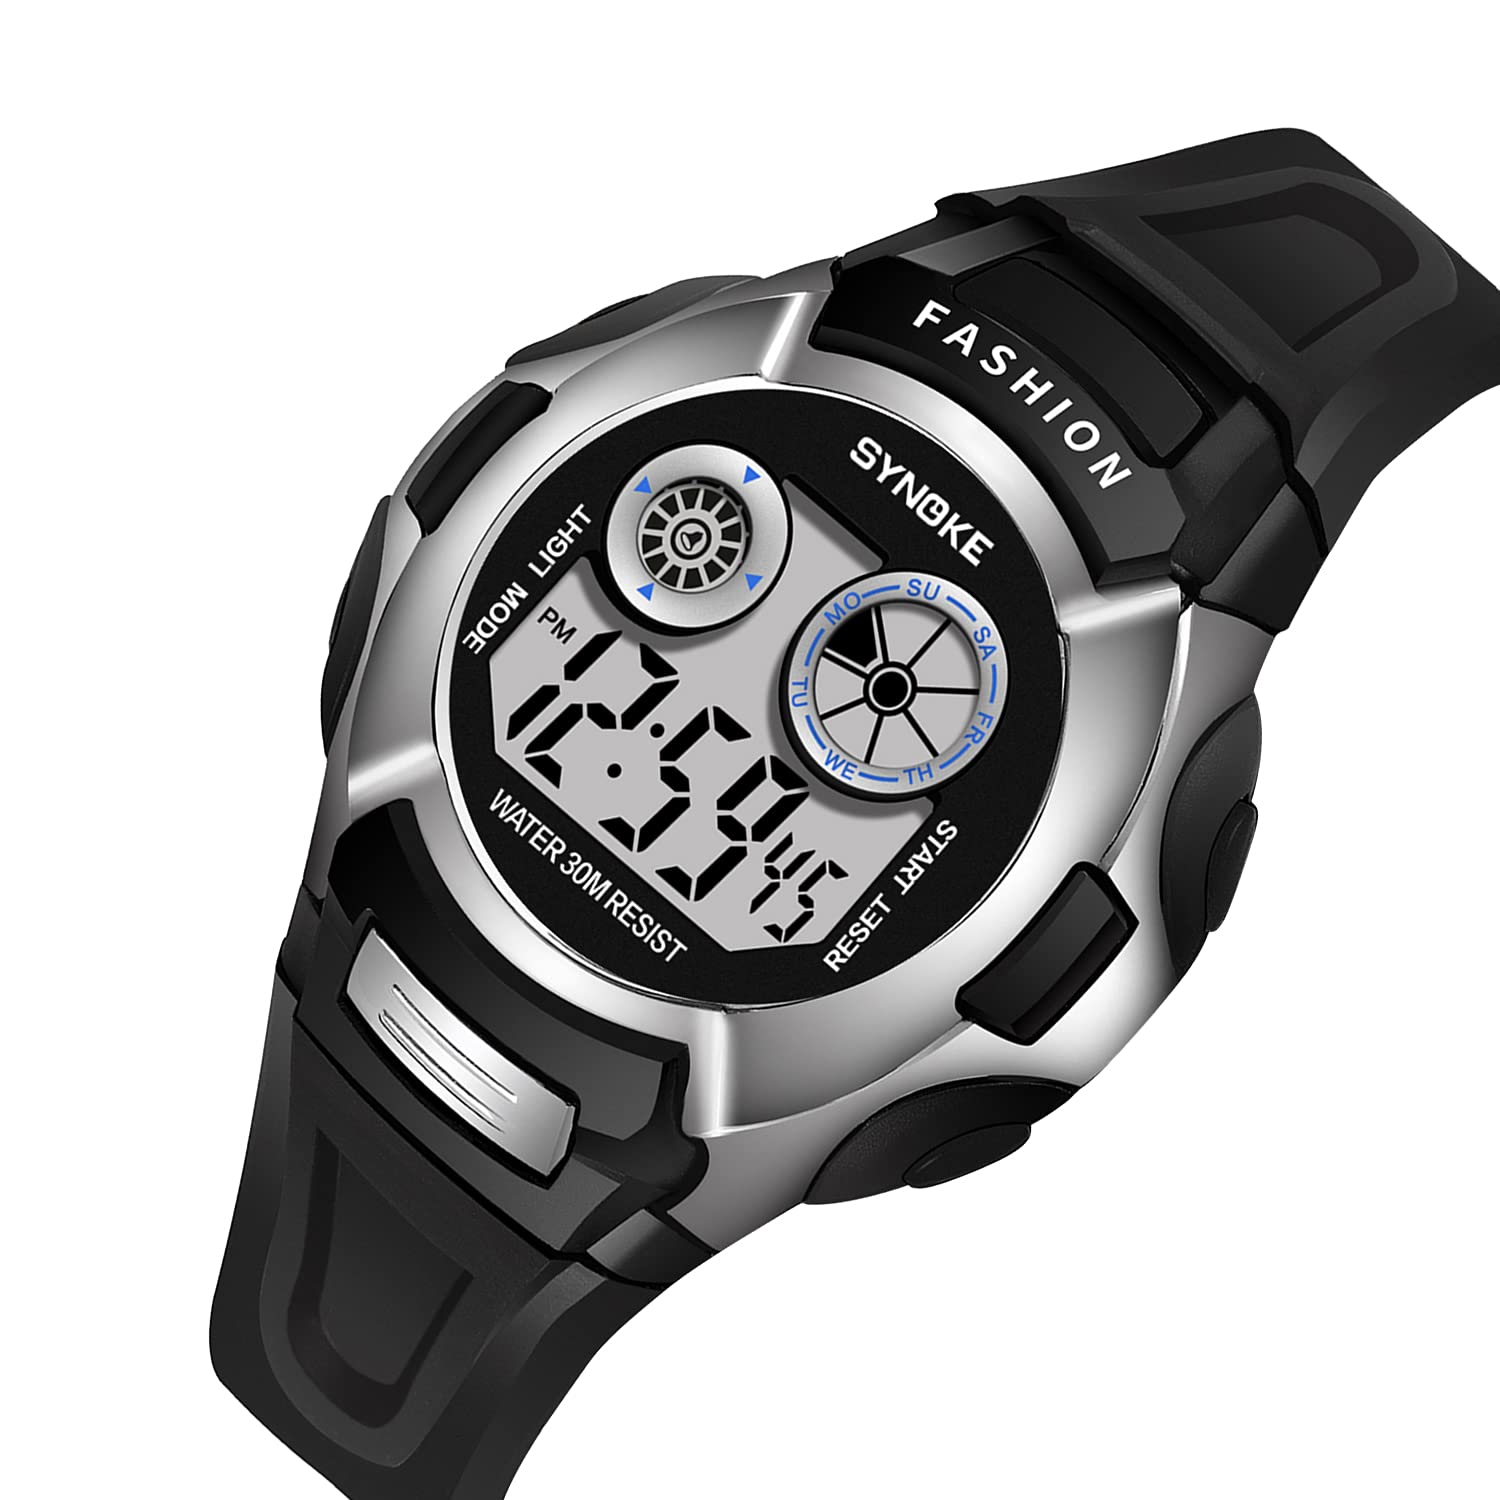 Fashion Outdoor Sports Watches Digital Watch Ultra Light Small Watch Waterproof LED Student Electronic Wrist Watch